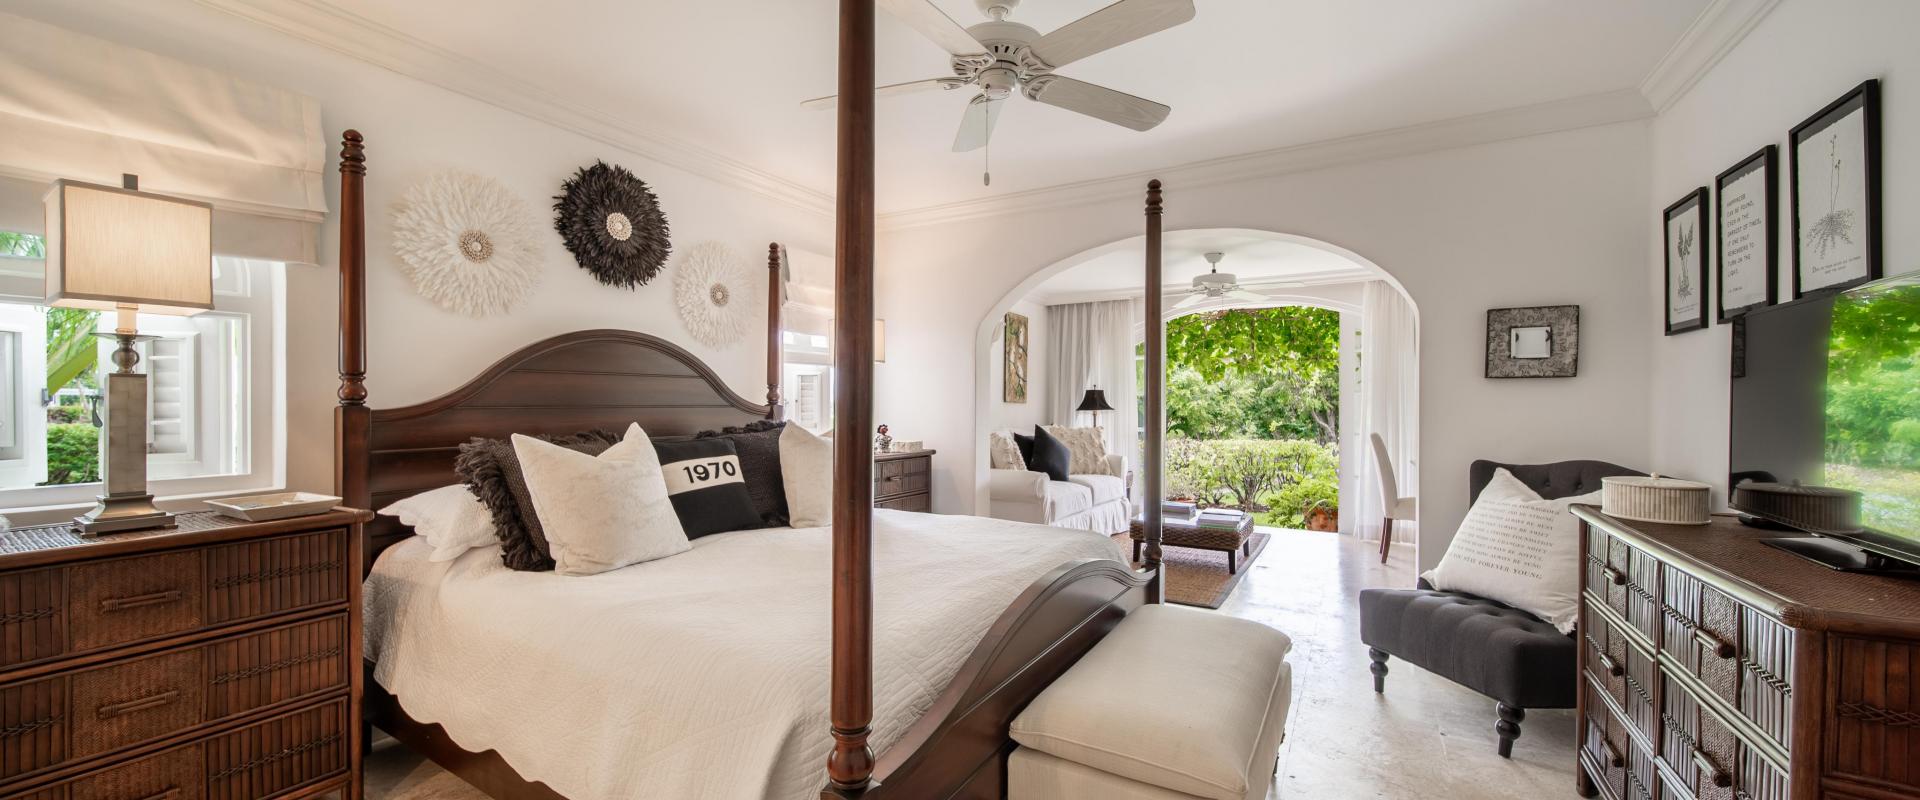 Forest Hills 25 Barbados Holiday Rental Royal Westmoreland Master Bedroom Four Poster Bed